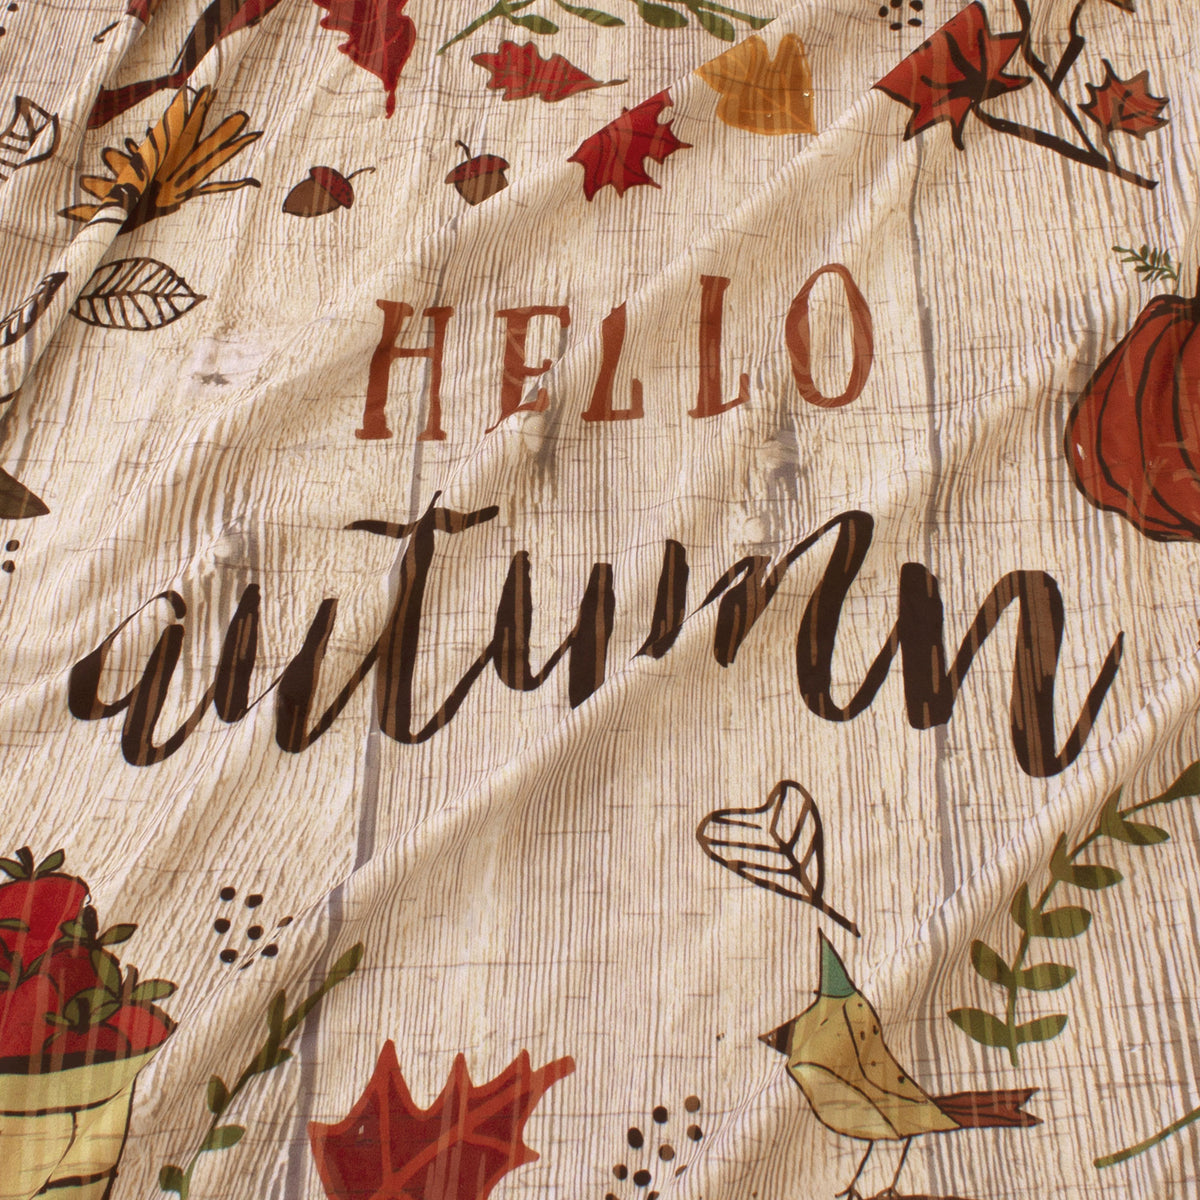 Hello Autumn Panel | Thanks Living